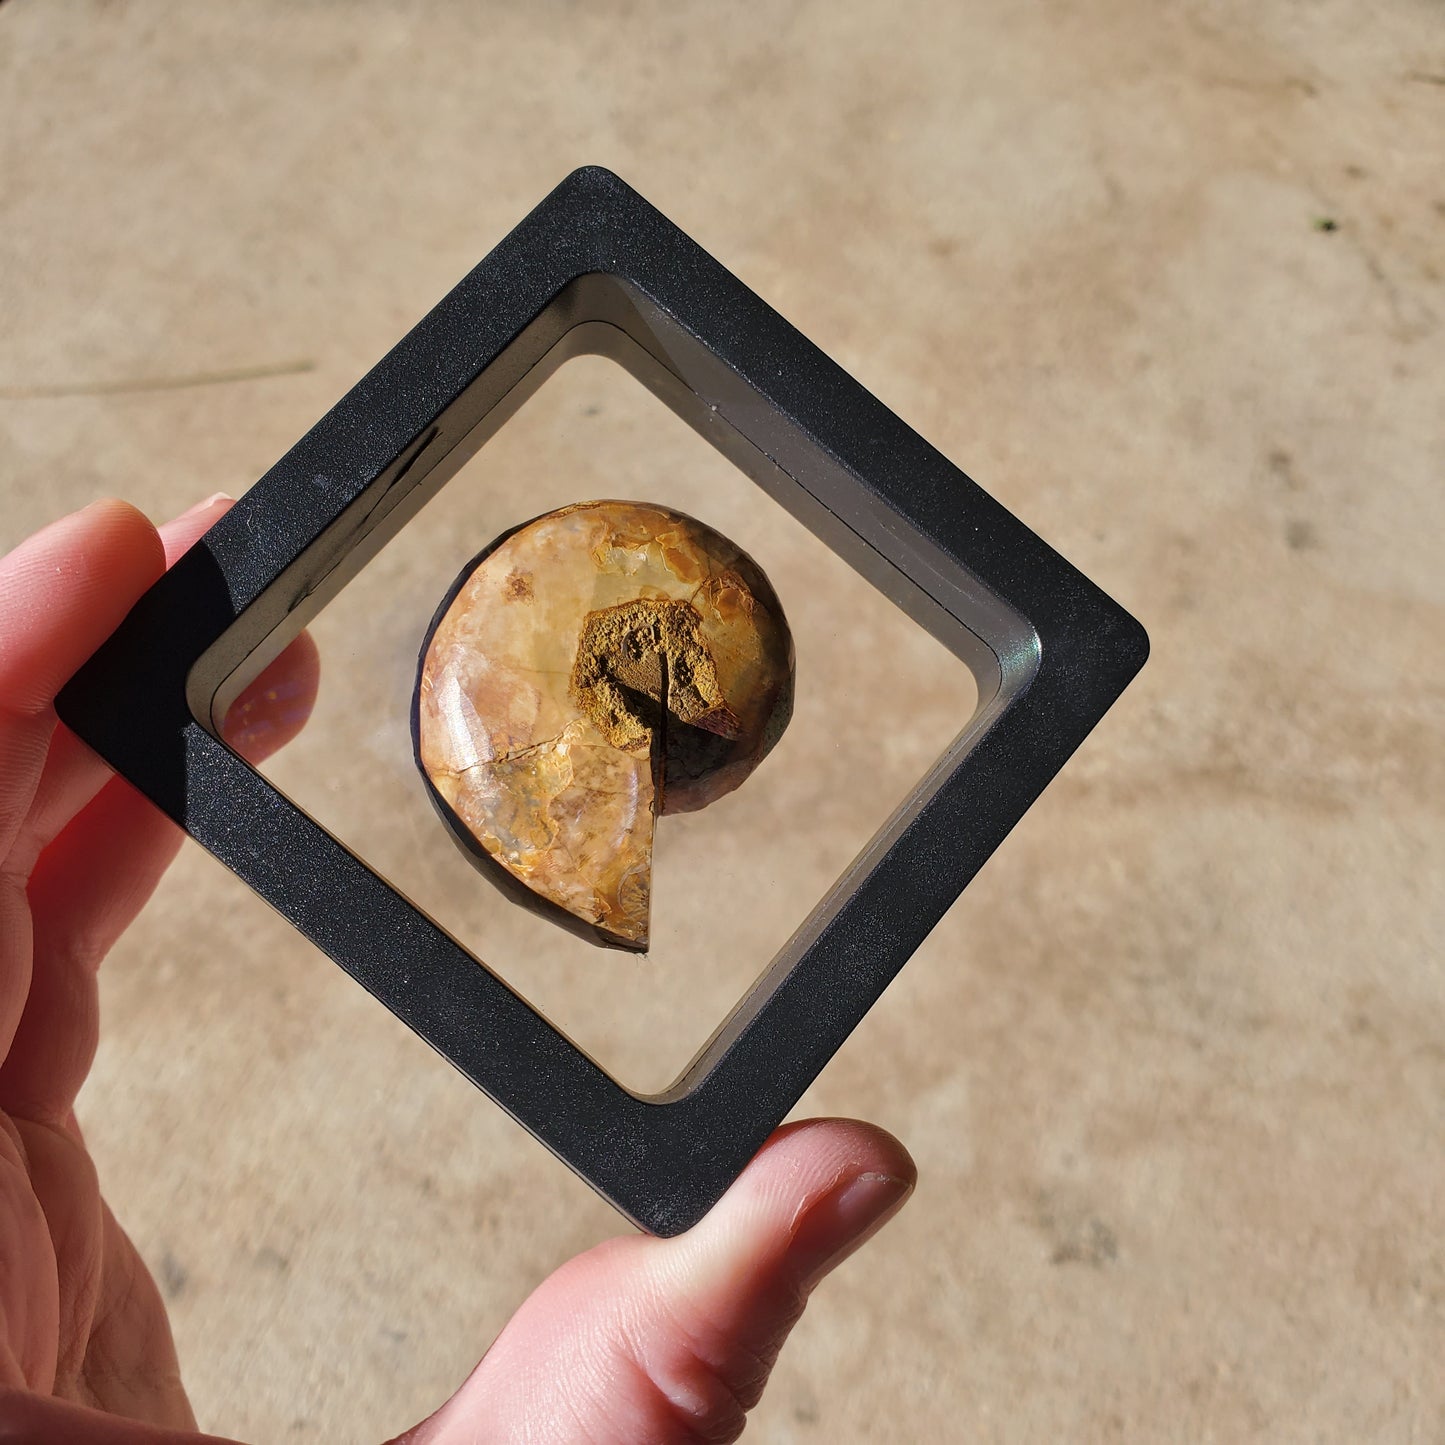 Opalized Ammonite Display #3